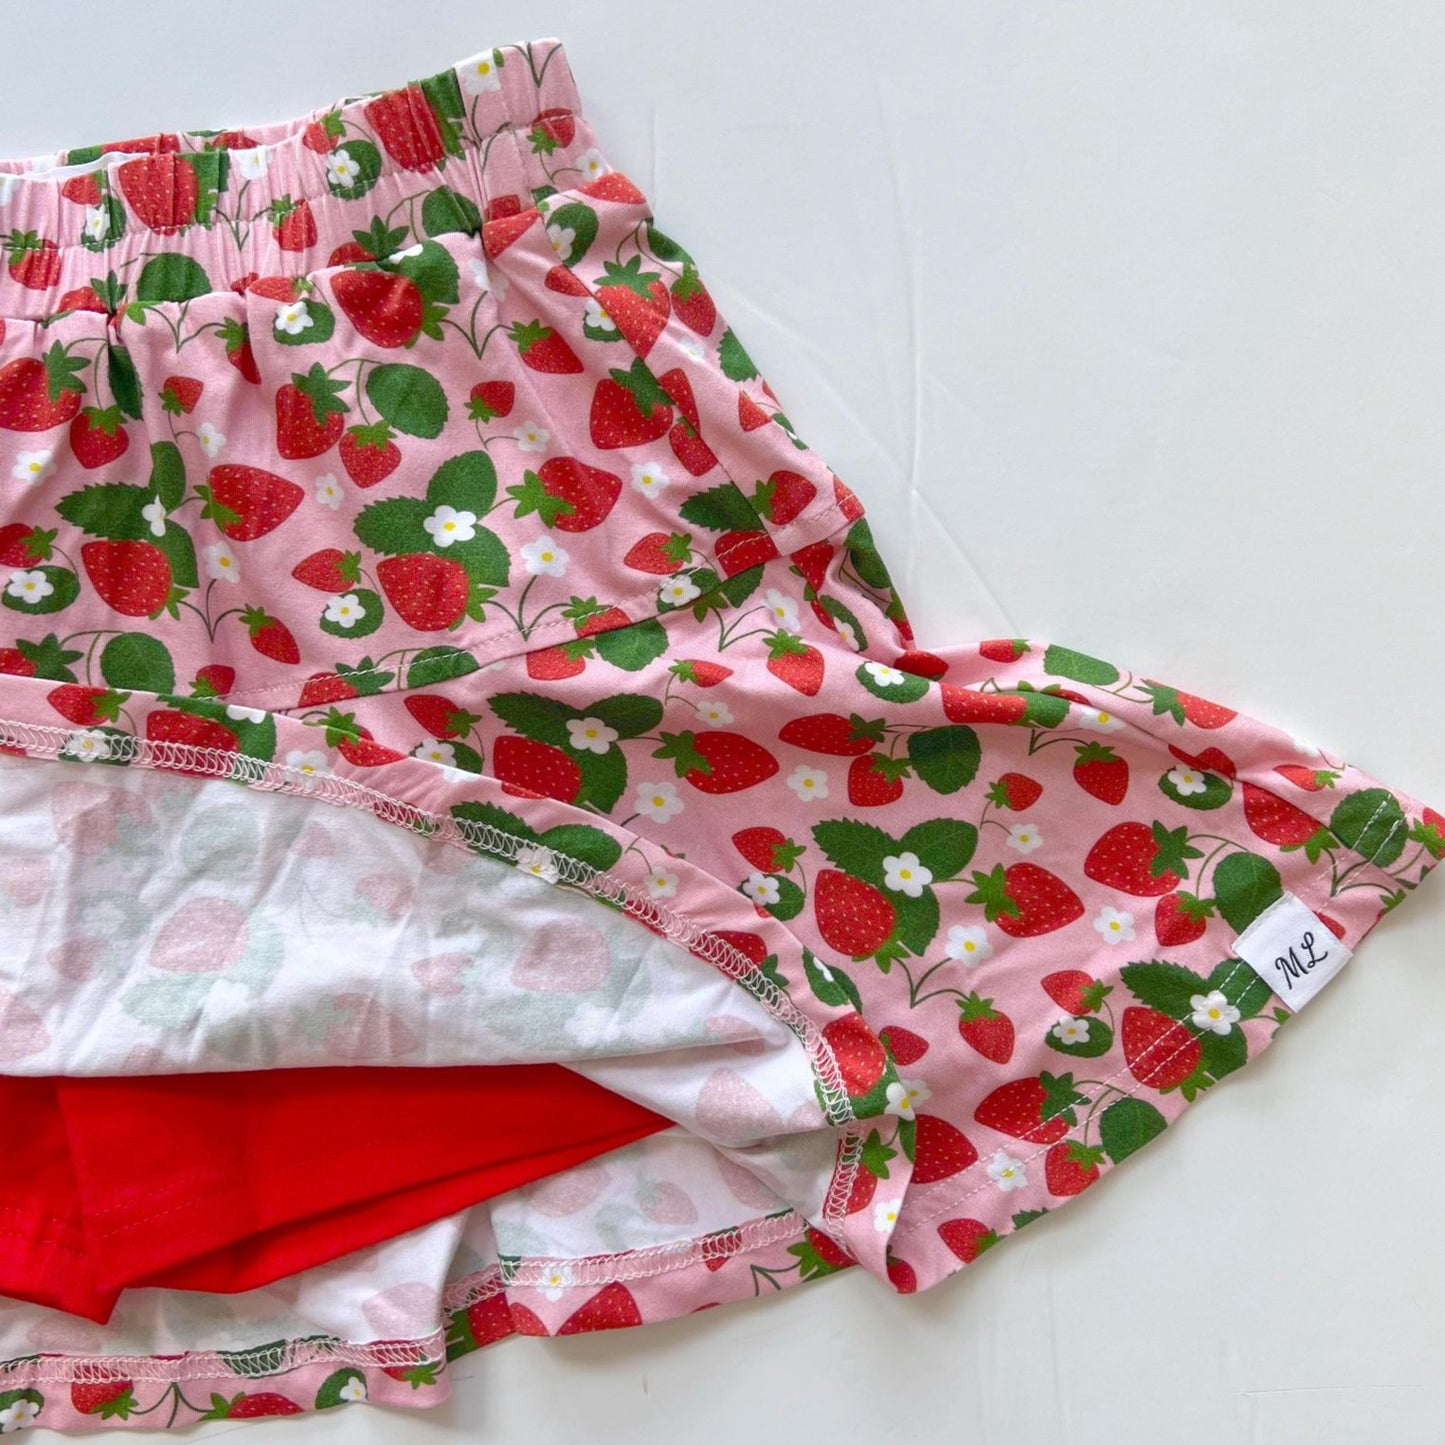 Strawberry Shortcake Tank (matches skort or wear separately)